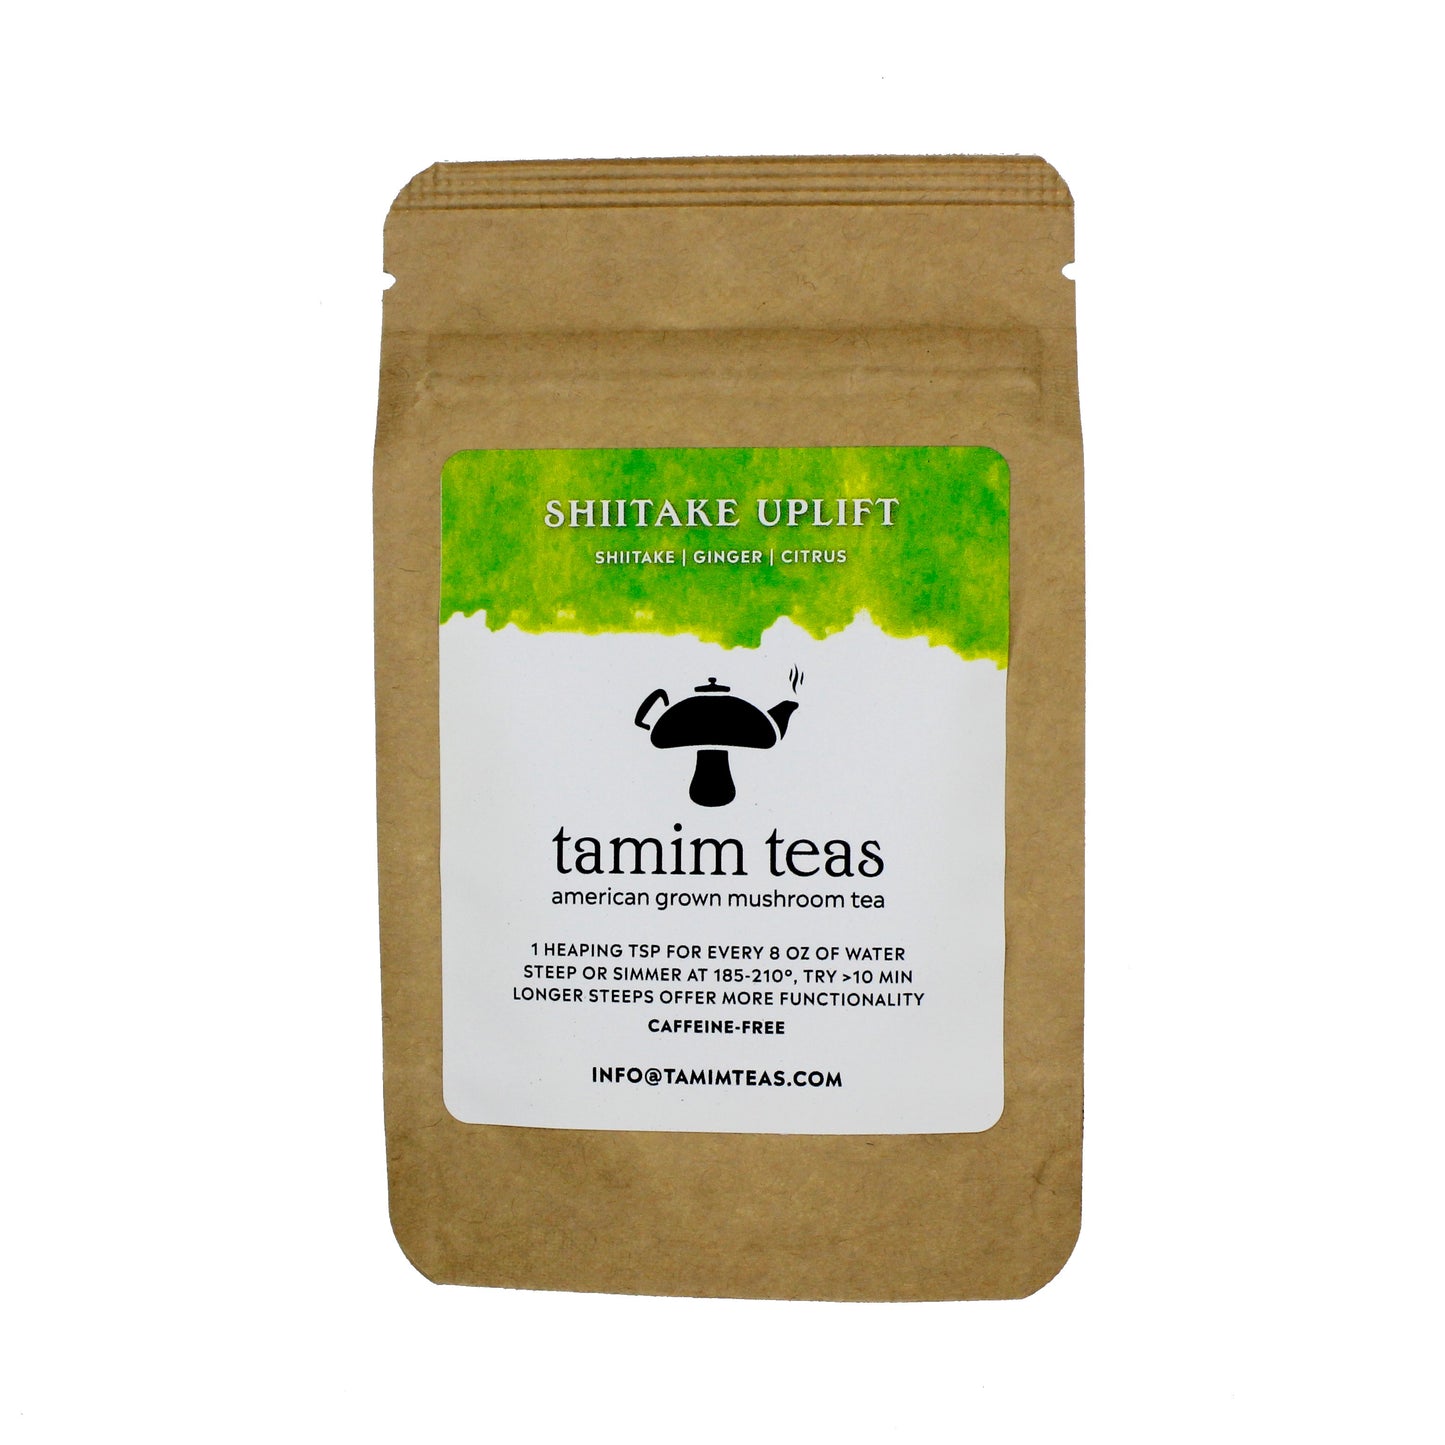 Uplift I Shiitake Mushroom Tea with Ginger and Citrus by Tamim Teas